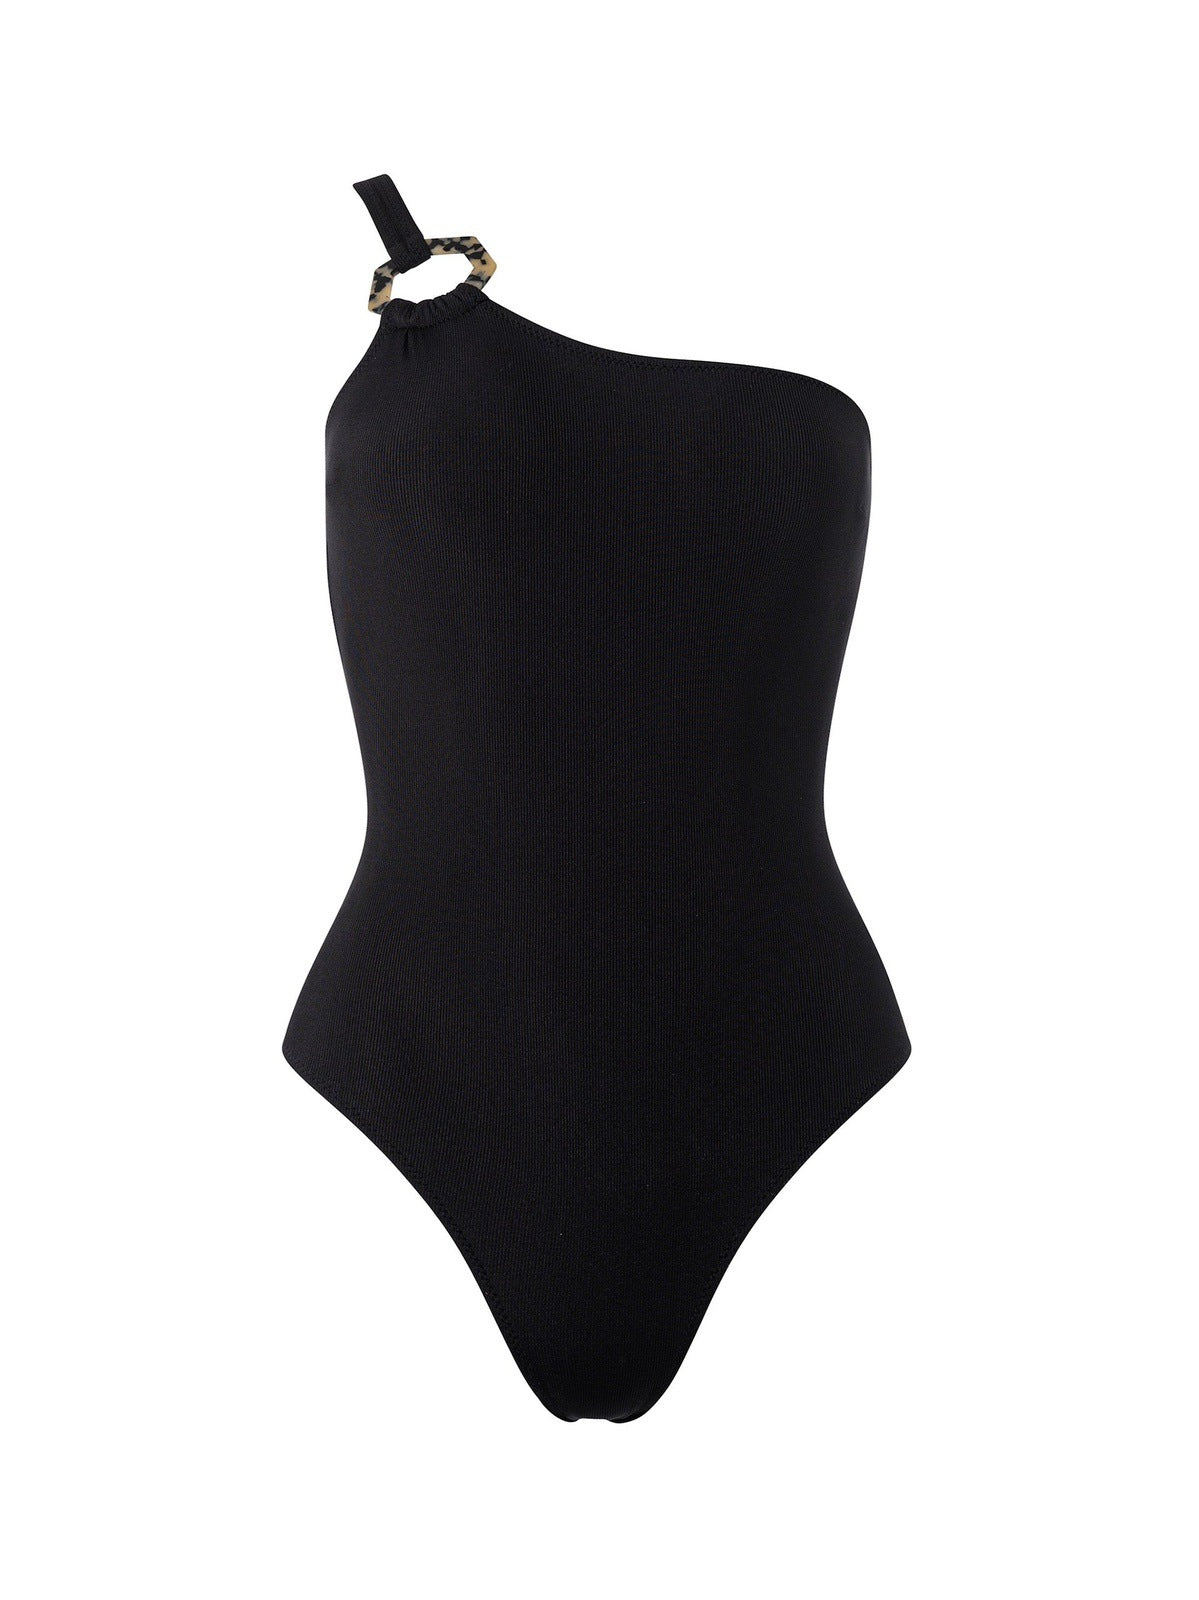 The Veneta swimsuit in Black